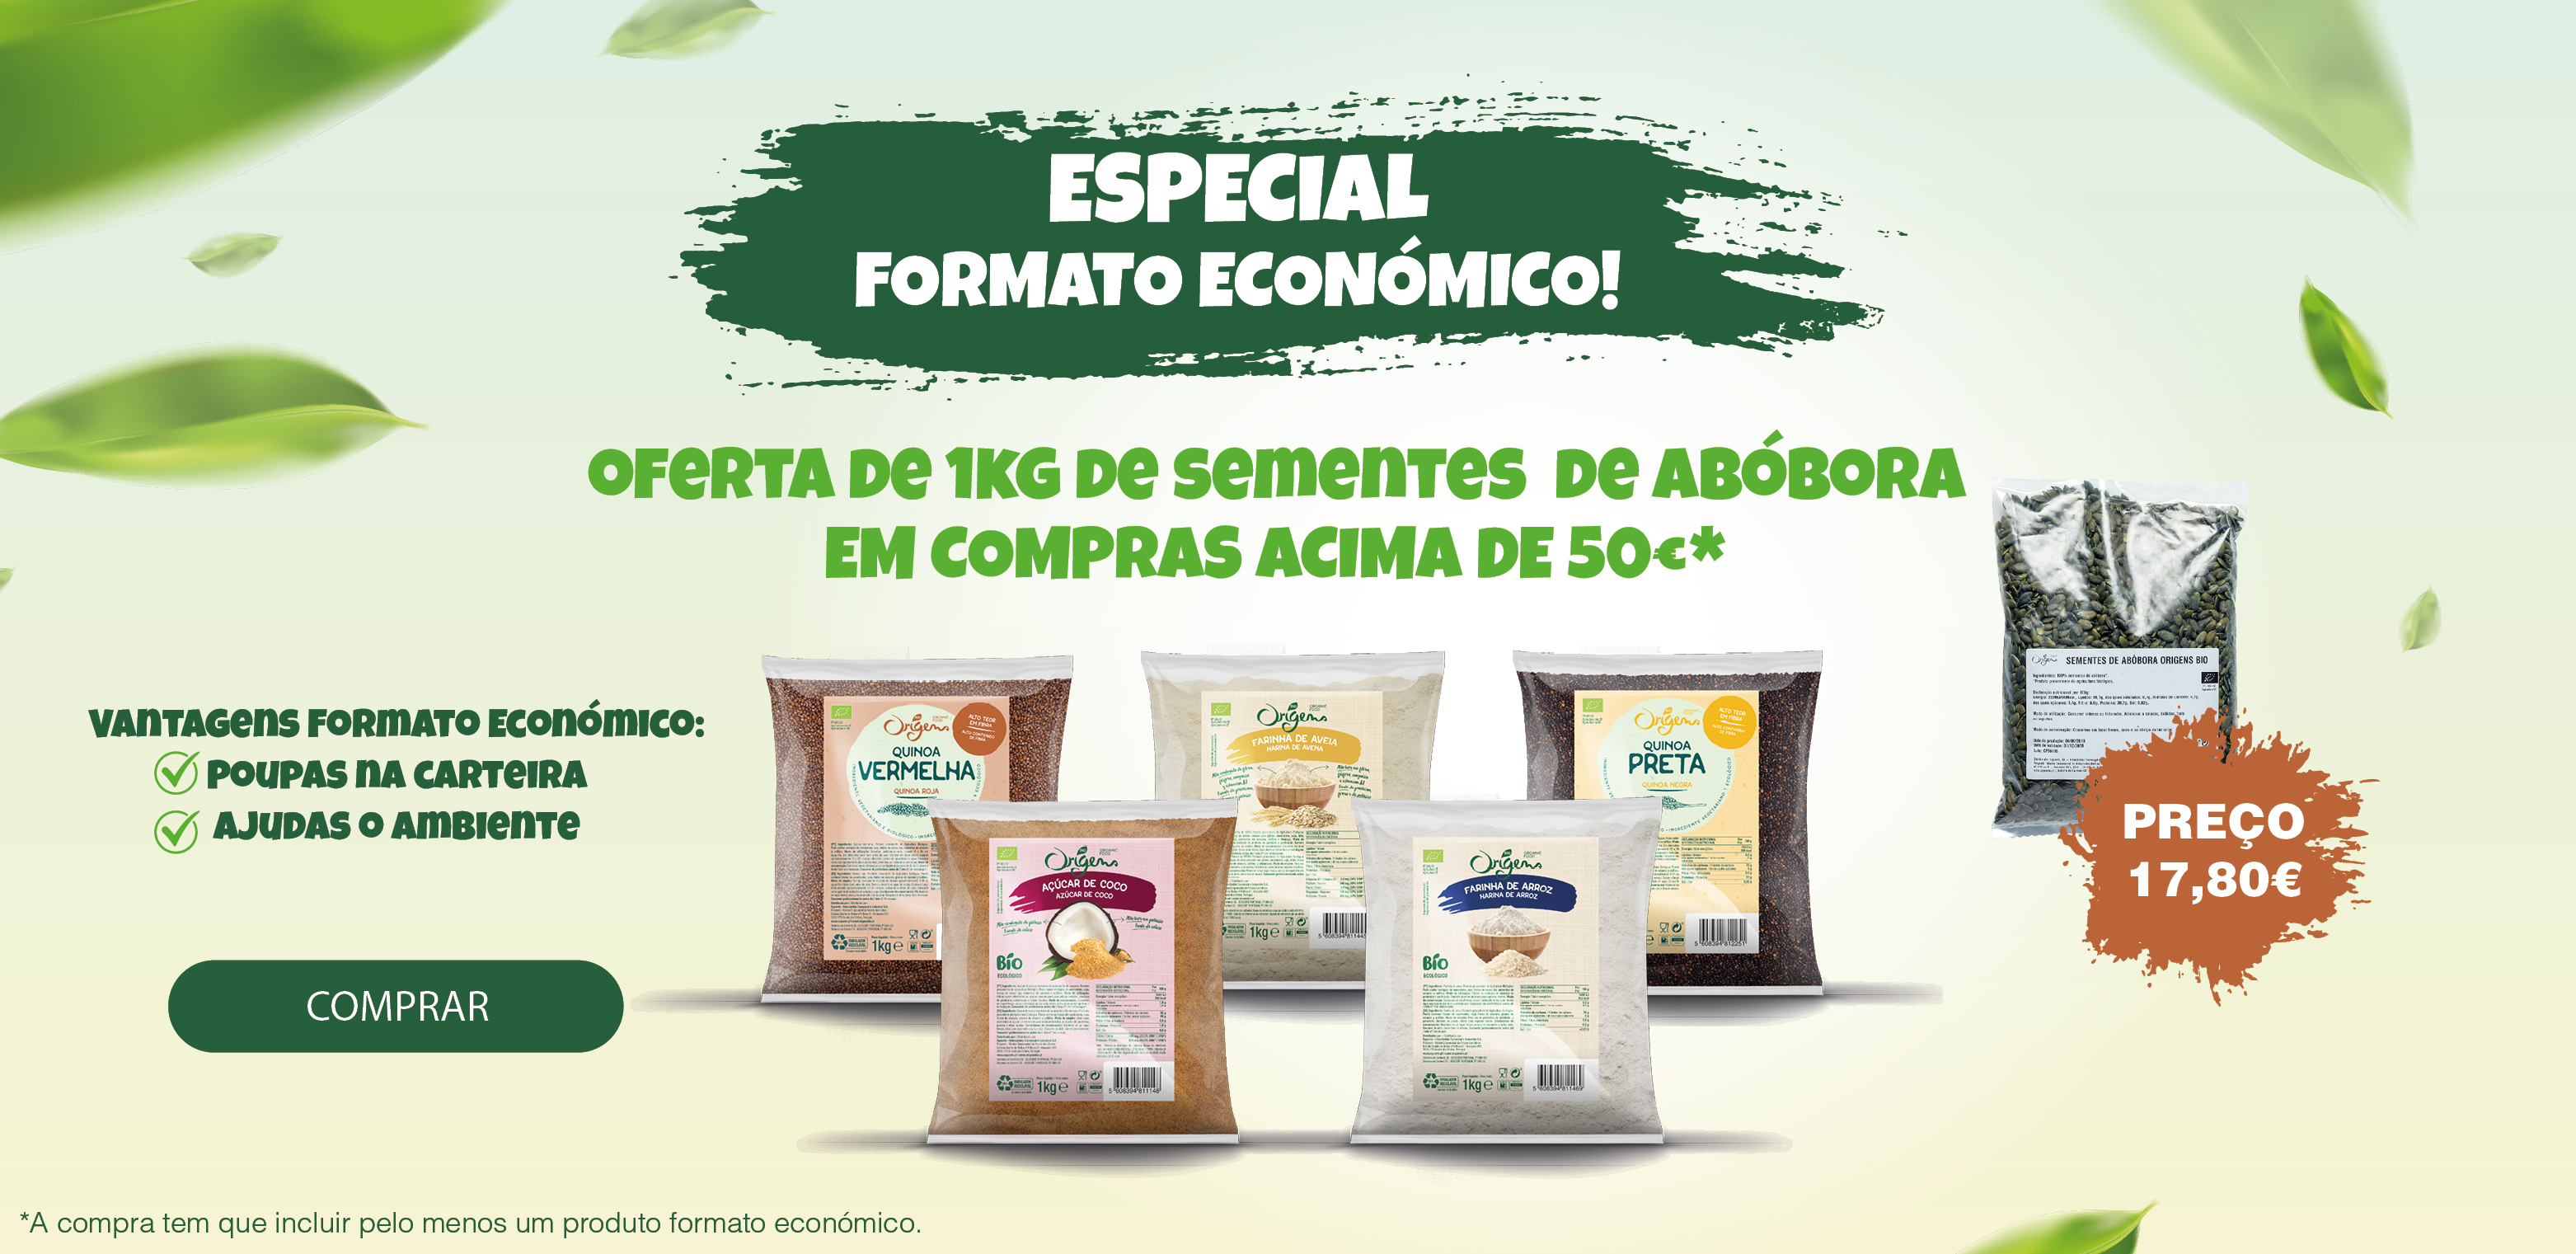 Campanha Formato Económico - oferta sementes abobora kg